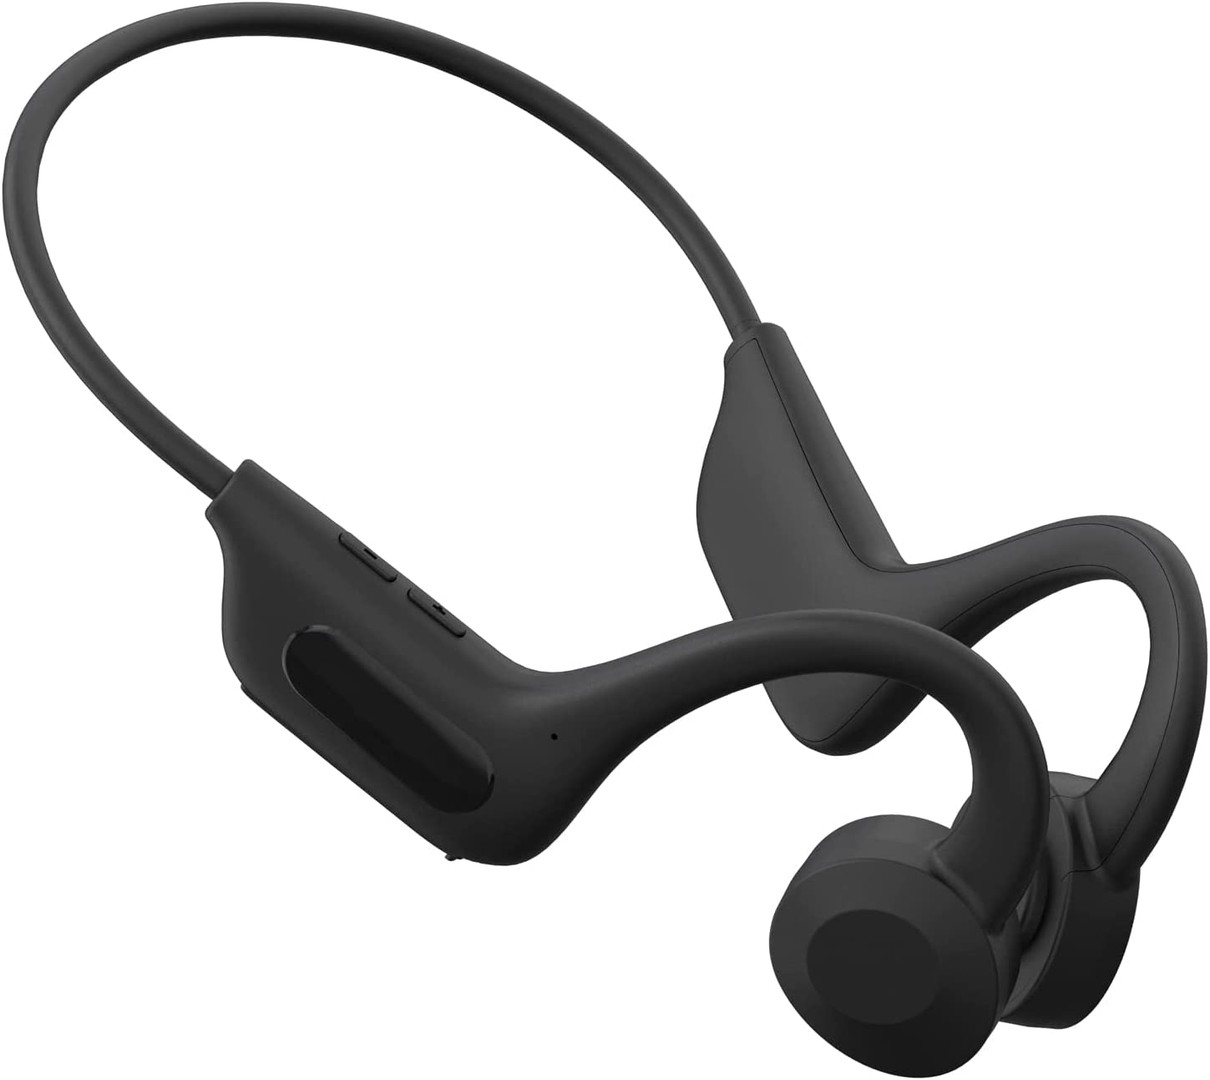 accesorios para electronica - Auriculares de oído abierto, inalámbricos, Bluetooth, audifonos, conducción  0